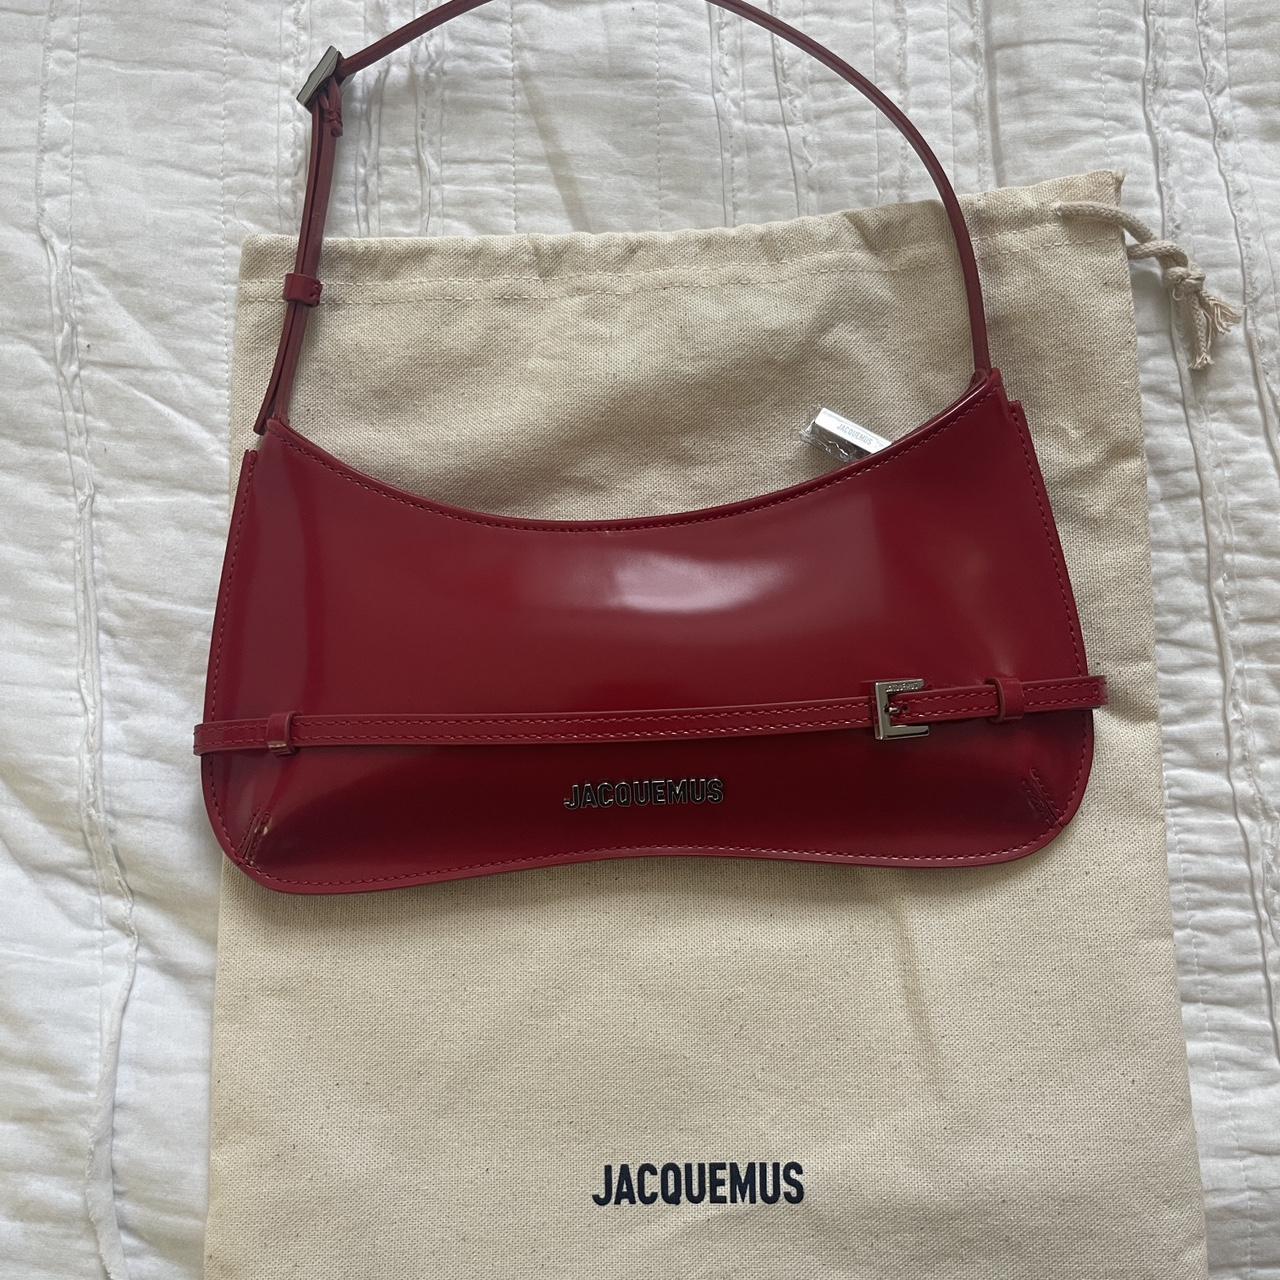 Jacquemus Women's Red Bag